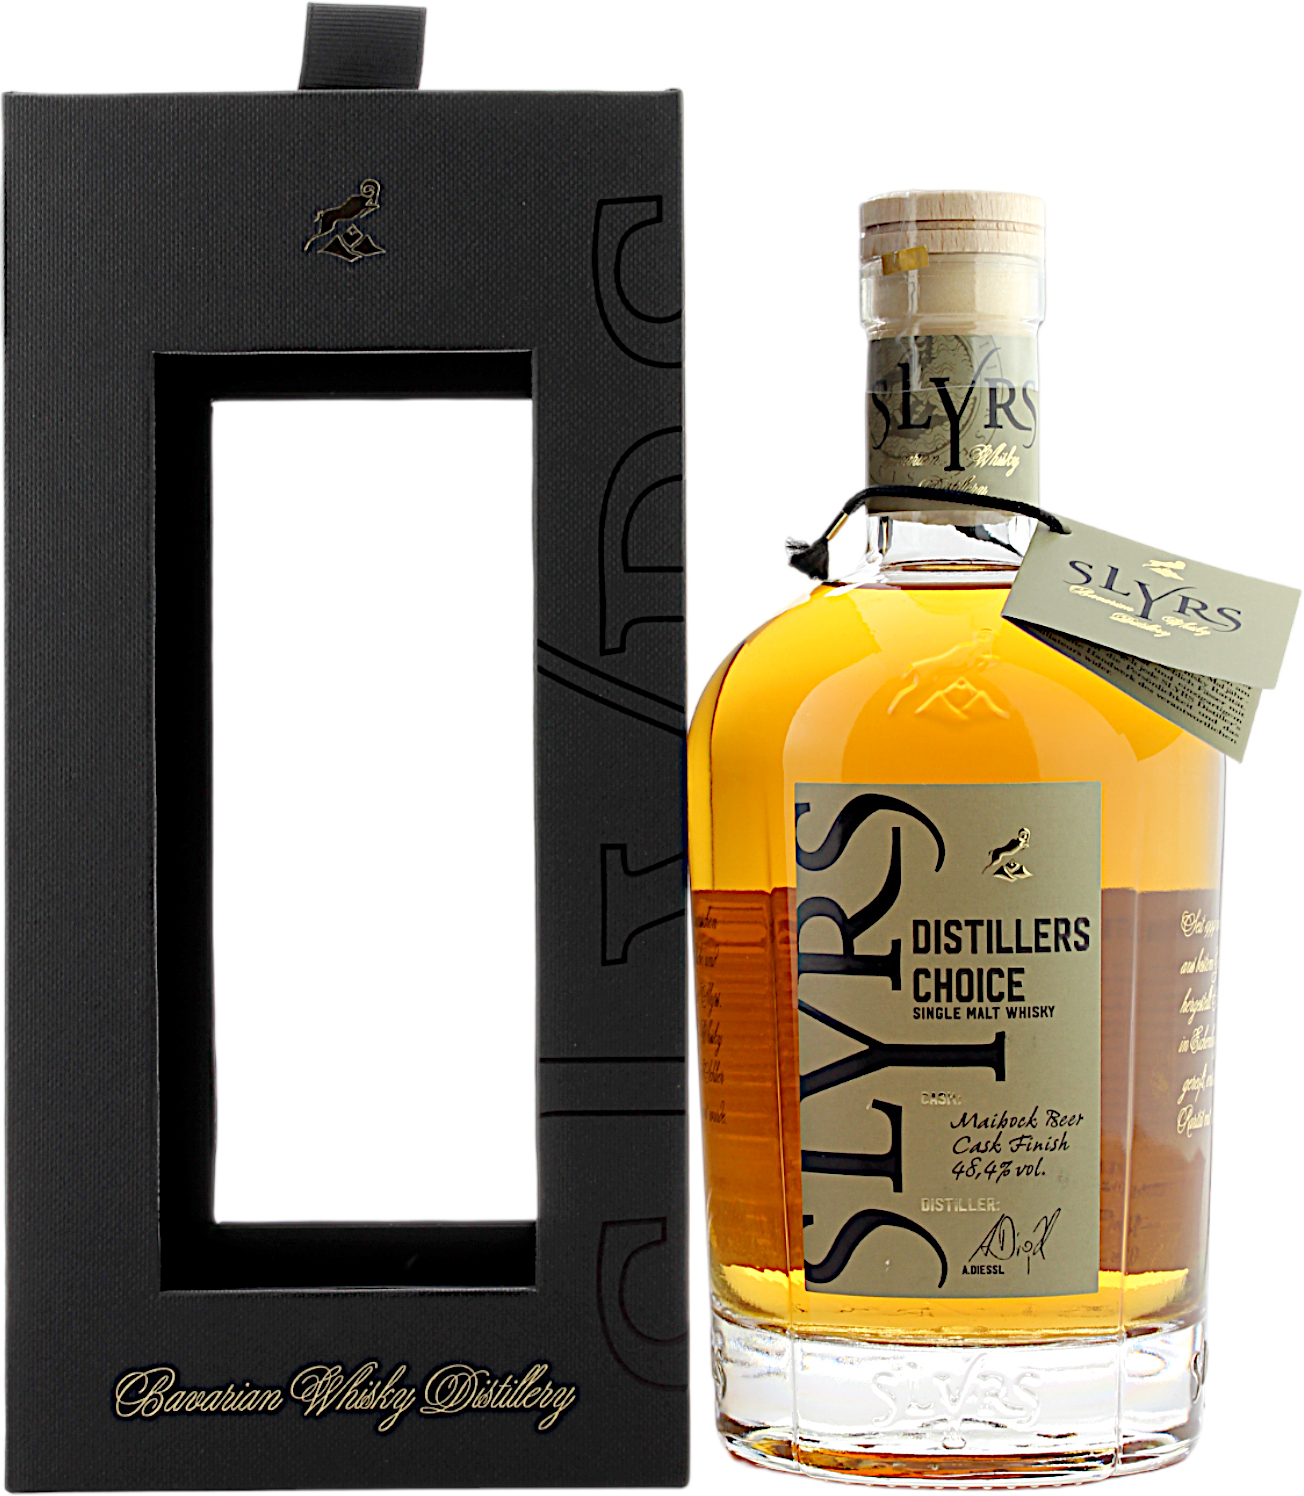 Slyrs Single Malt Whisky Distillers Choice Maibock Cask Finish 48.4% 0,7l